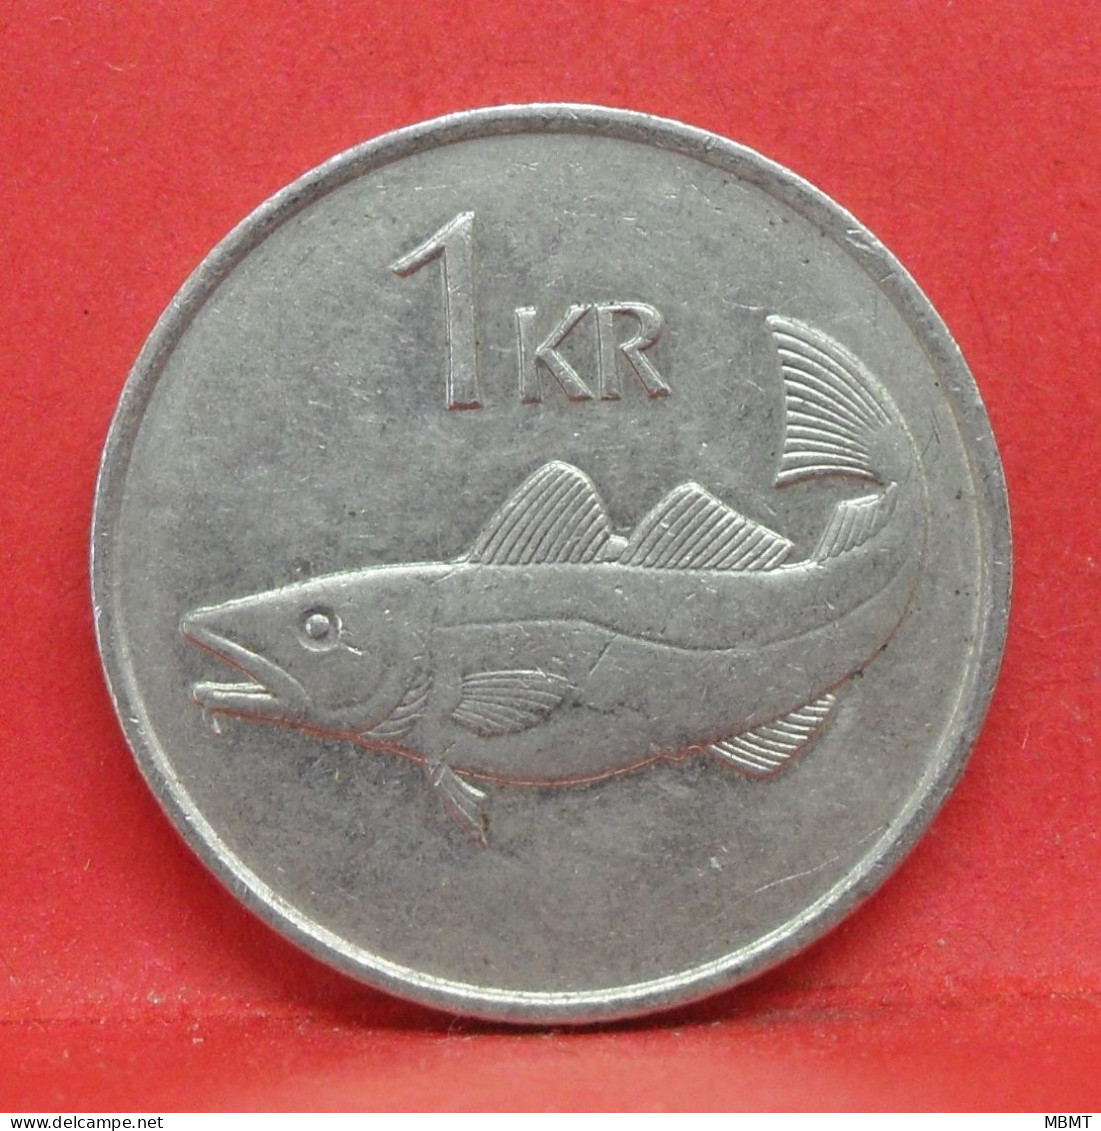 1 Krona 1984 - SUP - Pièce De Monnaie Islande - Article N°3298 - Islandia